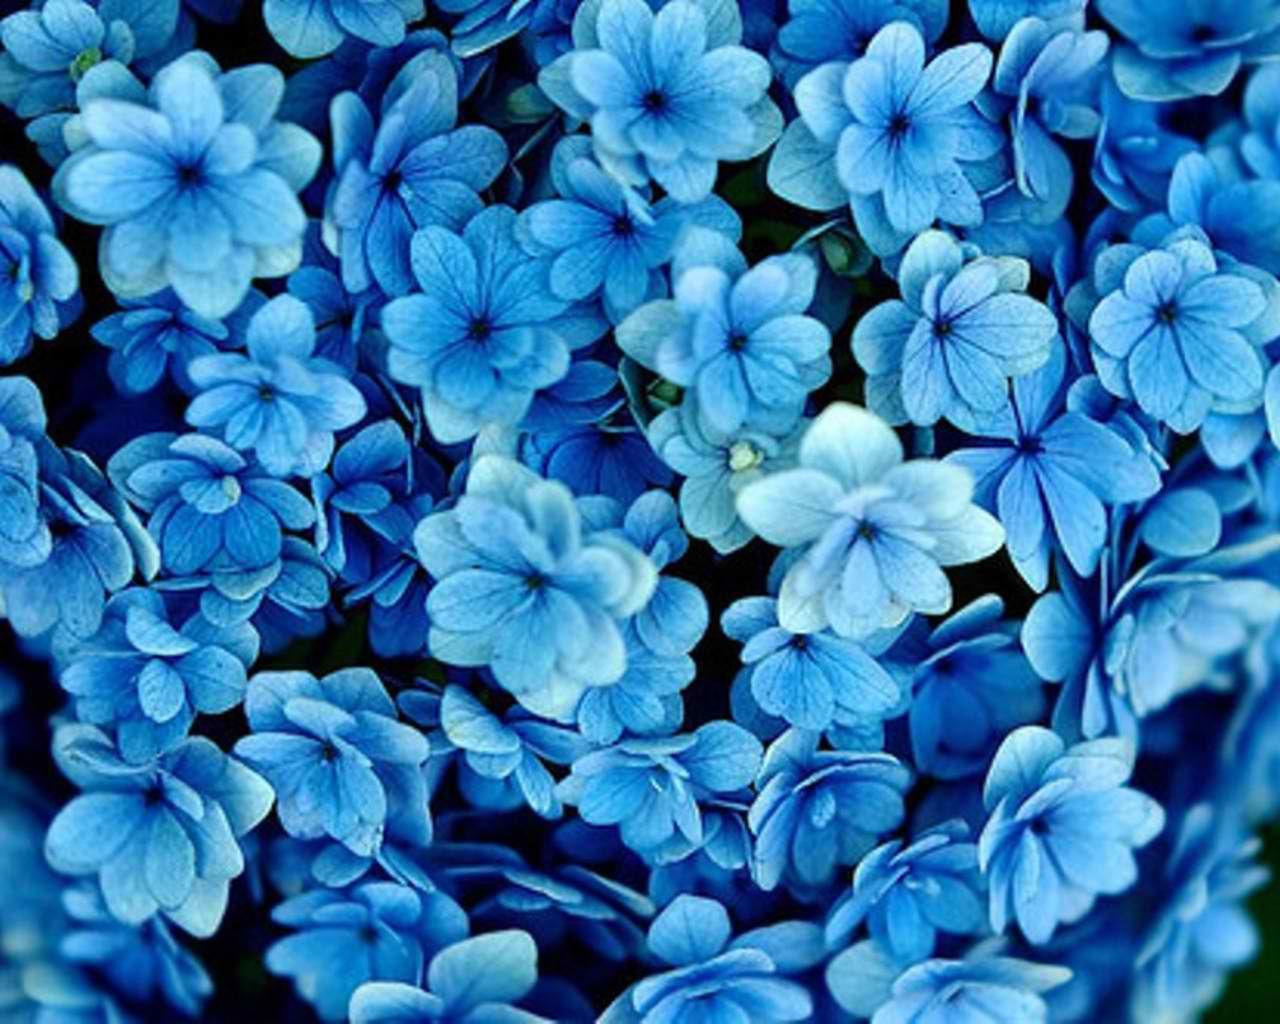 Cynthia Selahblue (cynti19) Wallpaper: Blue Flowers. Blue Flower Wallpaper, Blue Flower Picture, Blue Flowers Background